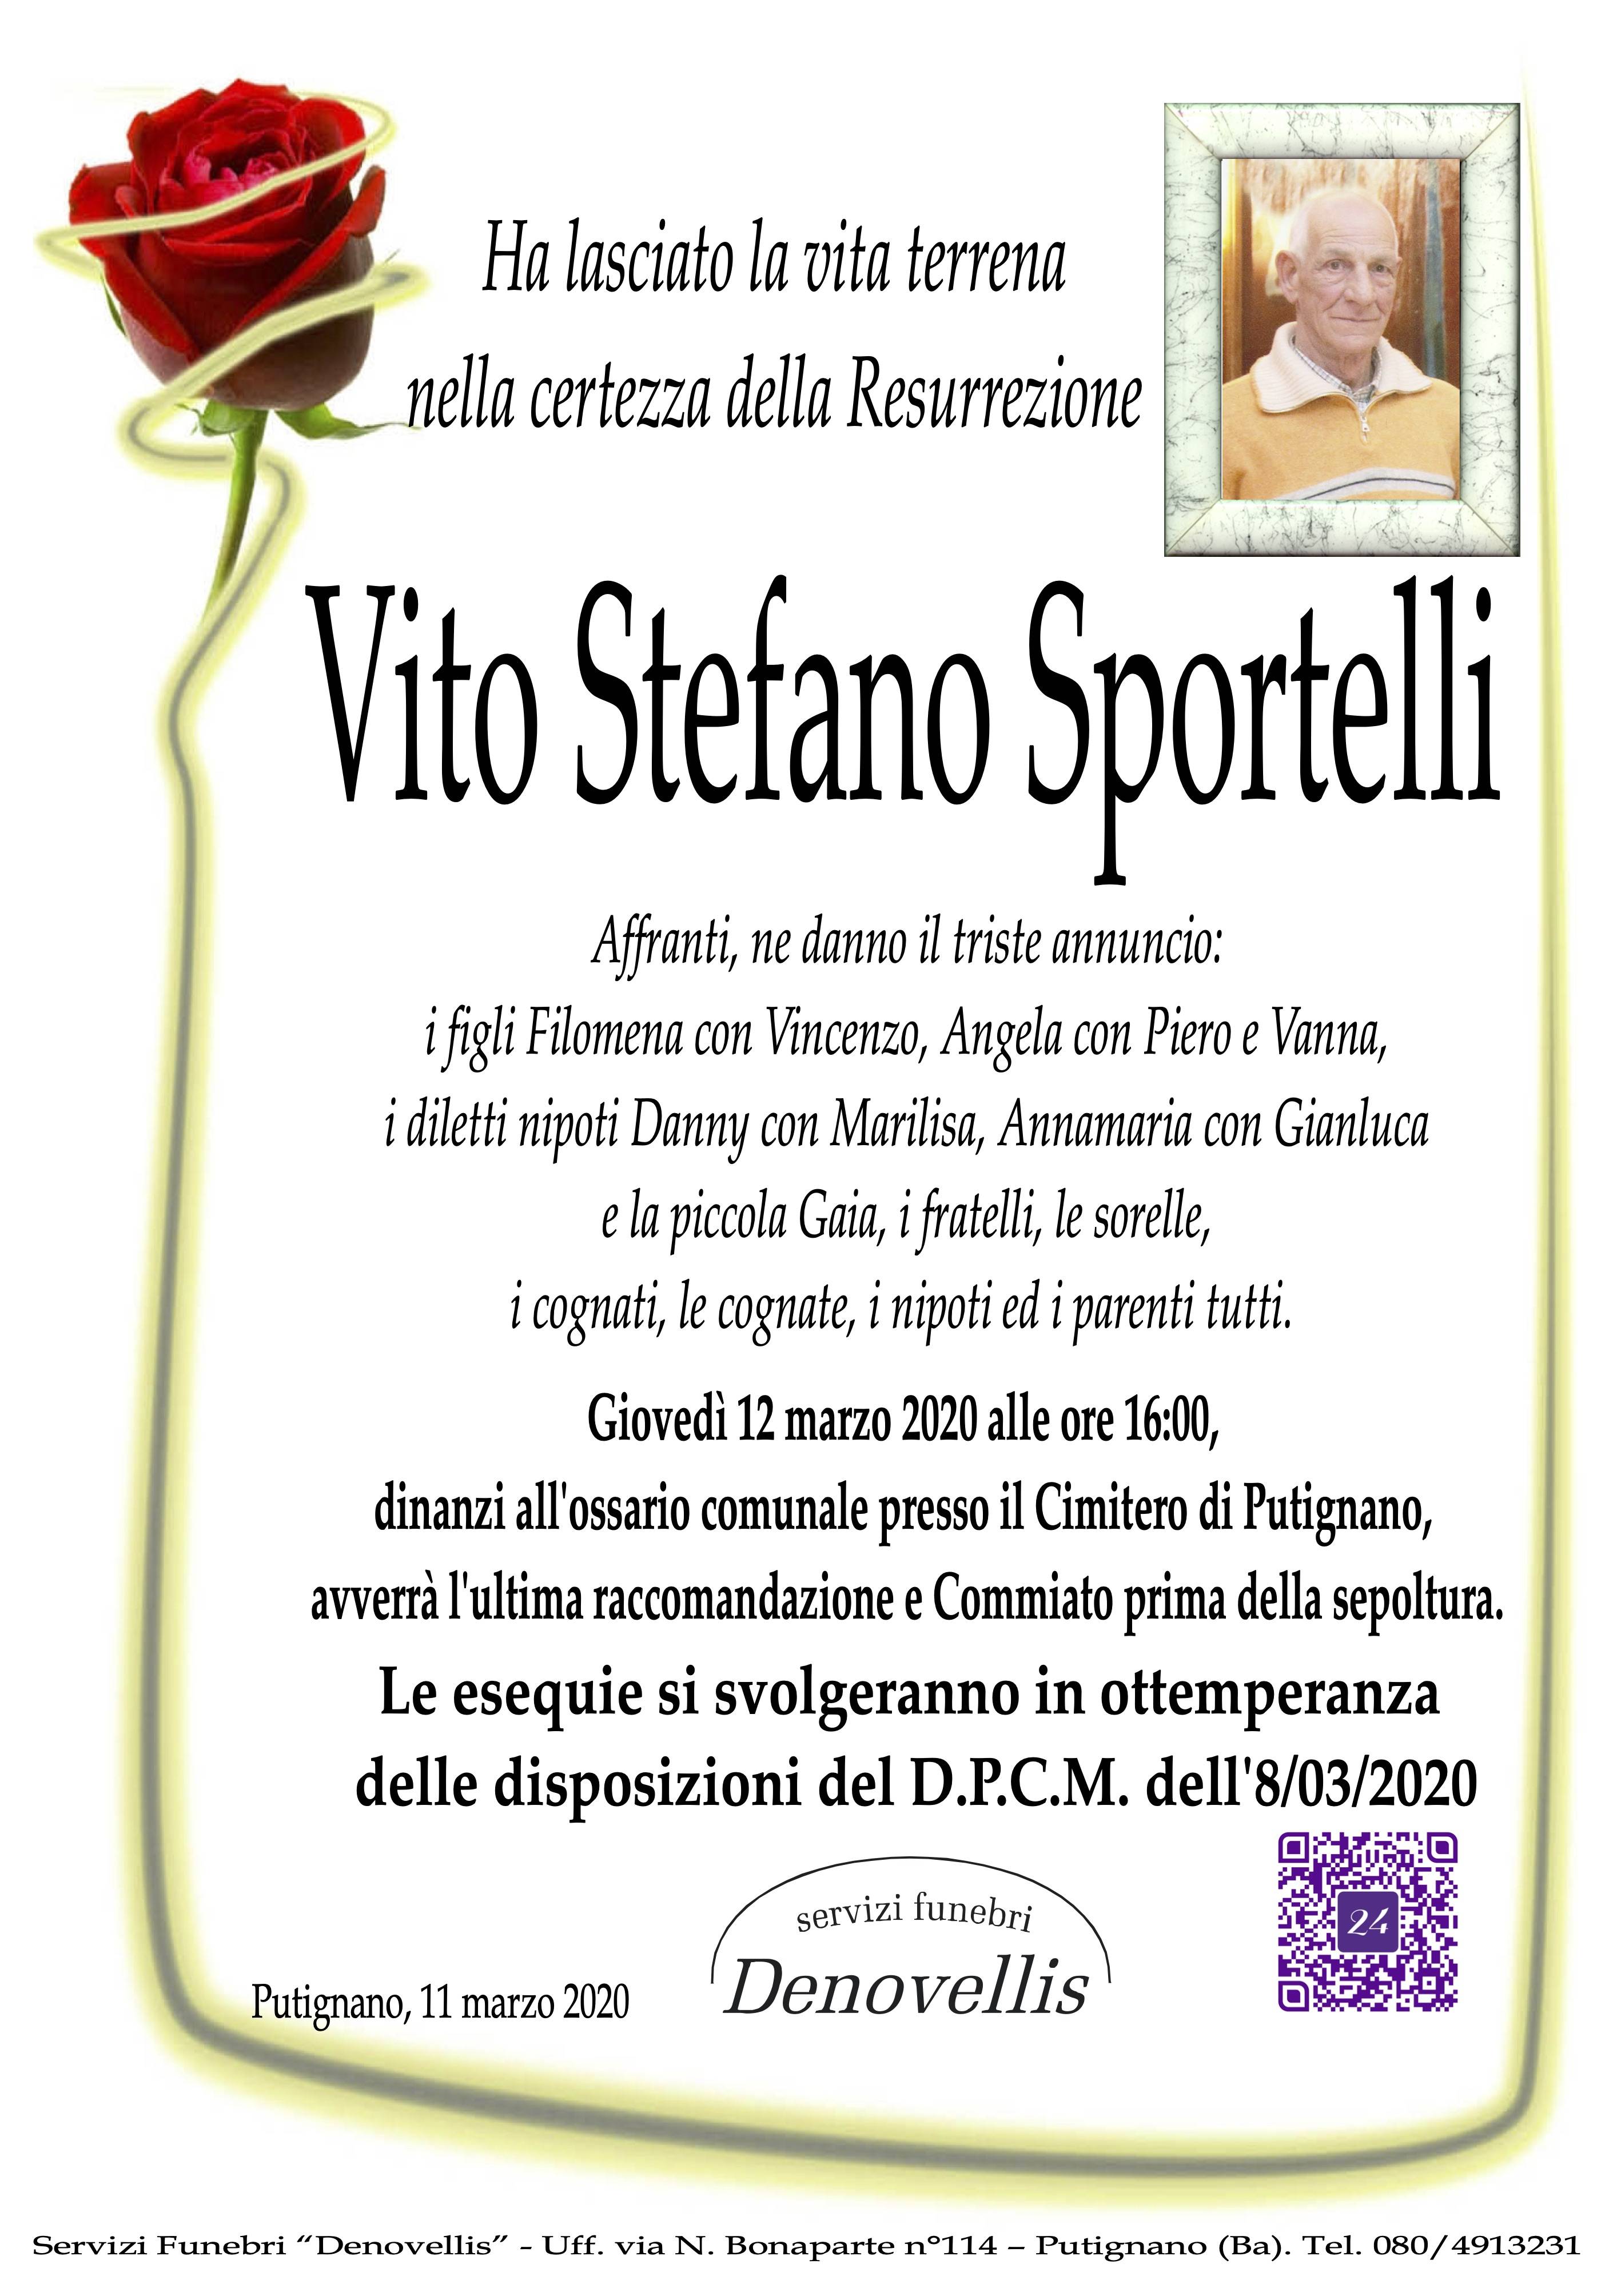 Vito Stefano Sportelli